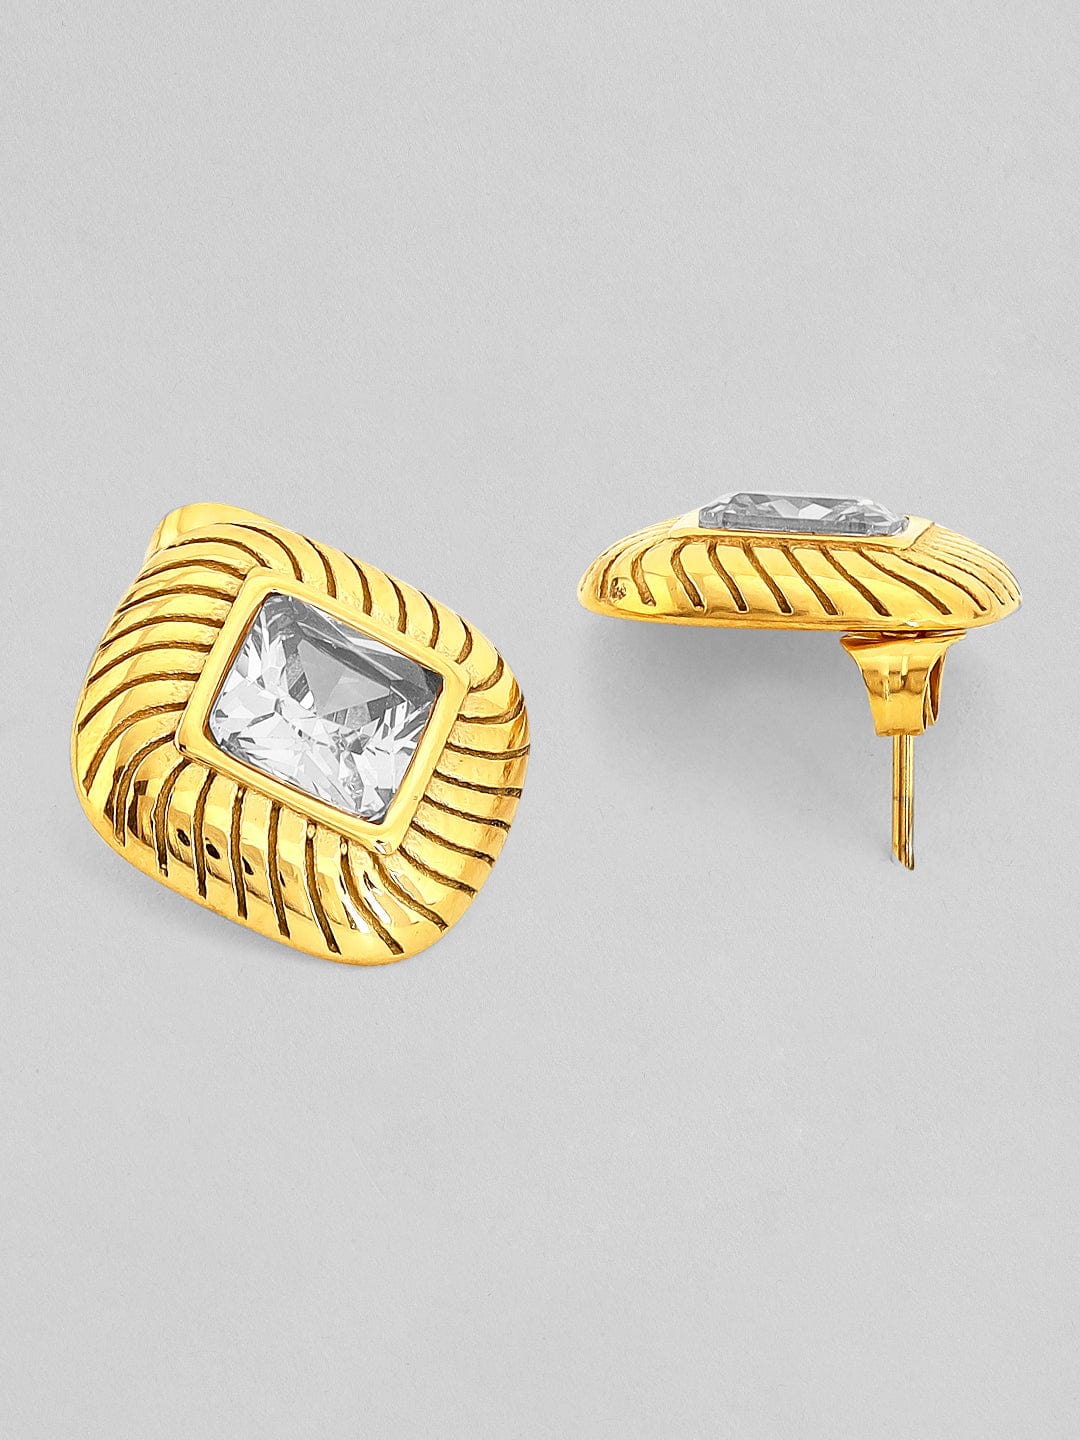 Rubans Voguish 18K Gold Plated Stainless Steel Waterproof Stud Earrings With Zircon Stone. Earrings